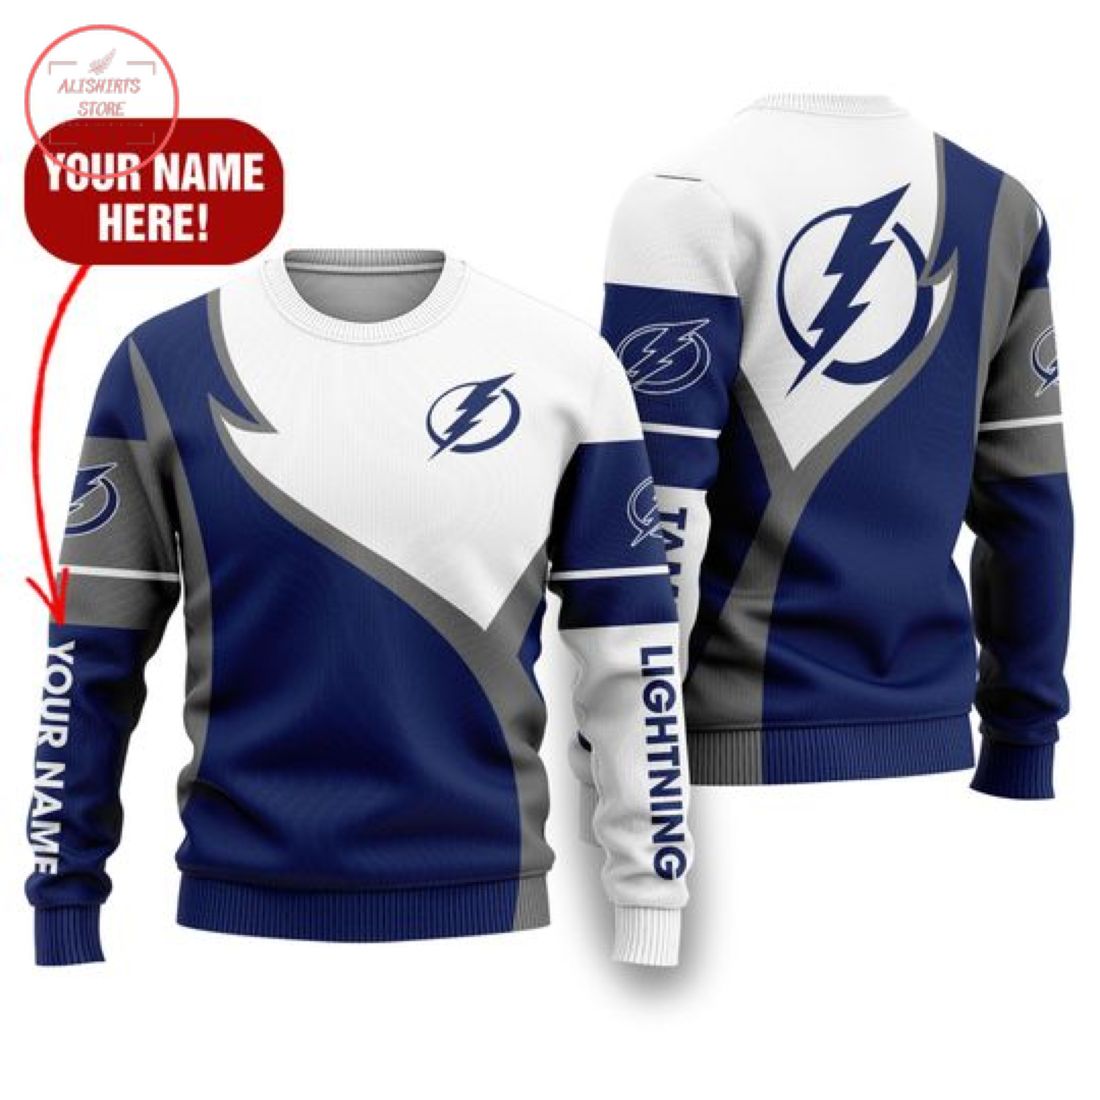 Nhl Tampa Bay Lightning Personalized Shirts